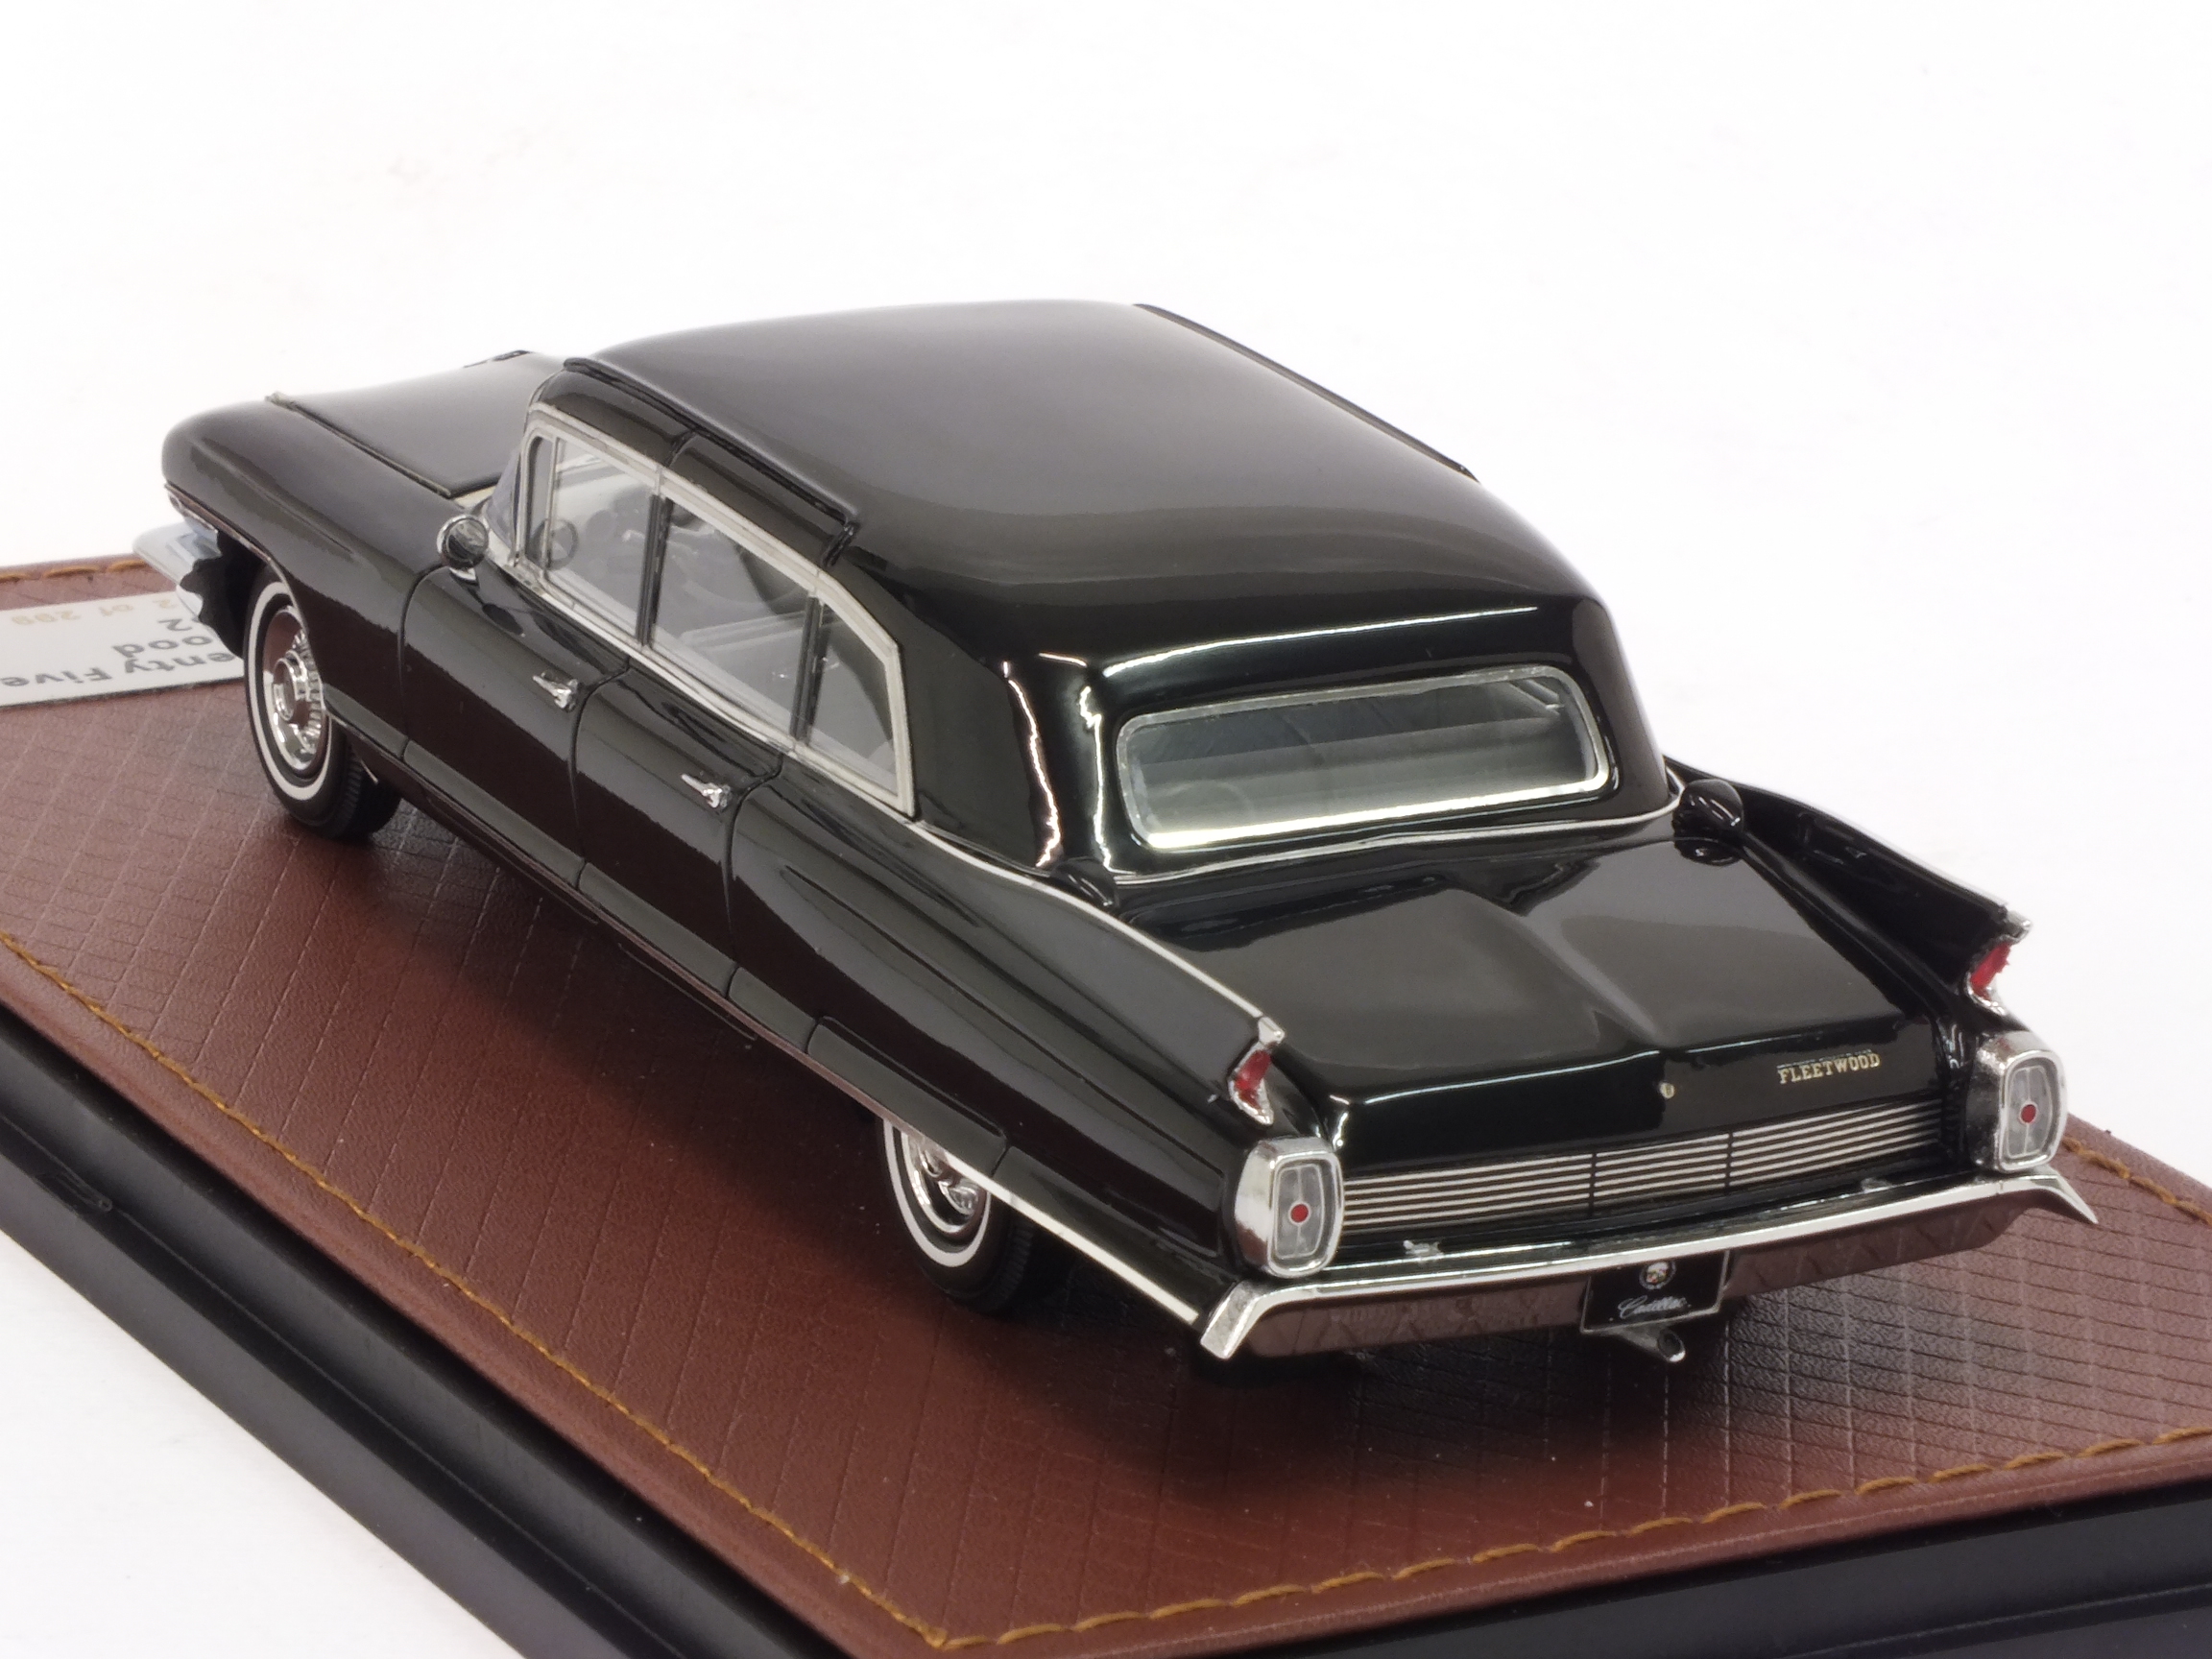 Cadillac Seventyfive Fleetwood 1962 (Black) - glm-models